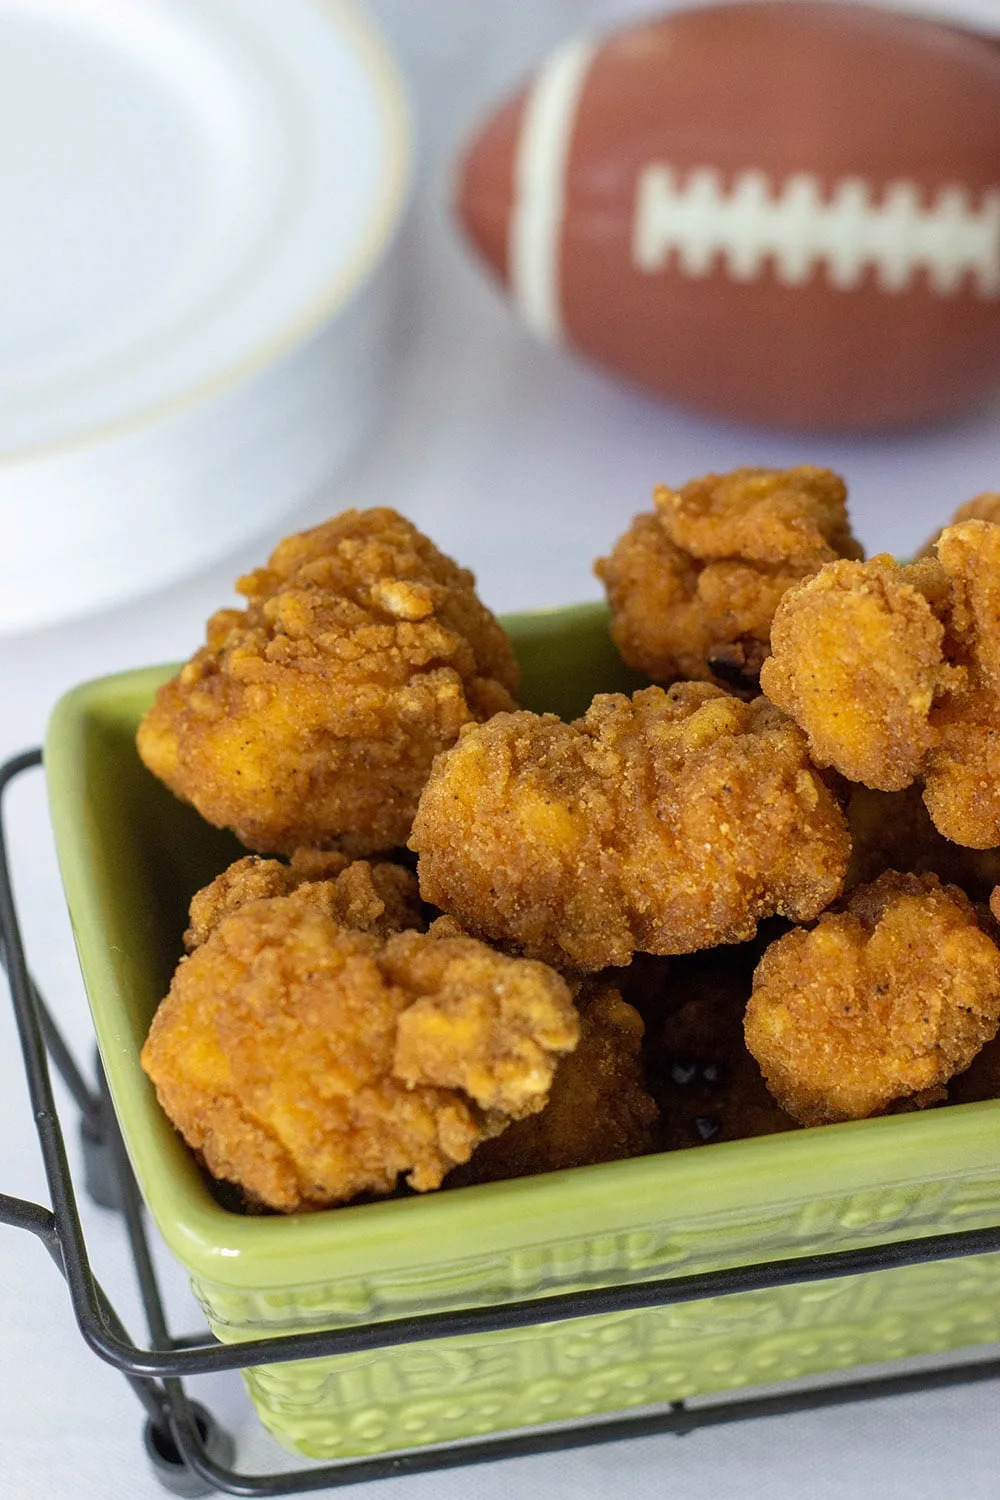 Popcorn chicken next to a football. 